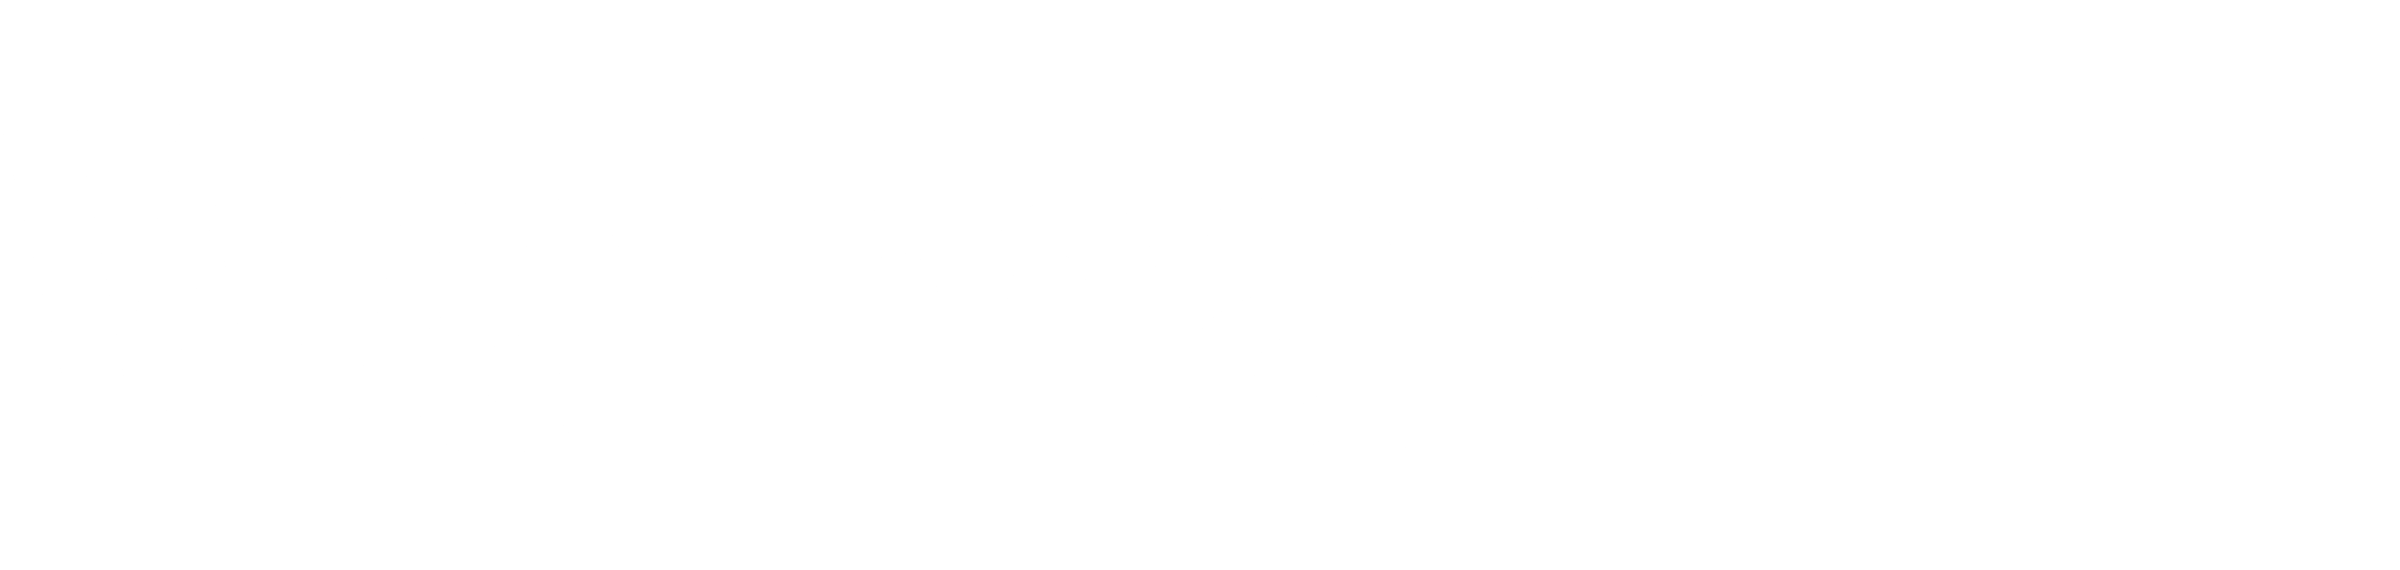 walmart-logo-white